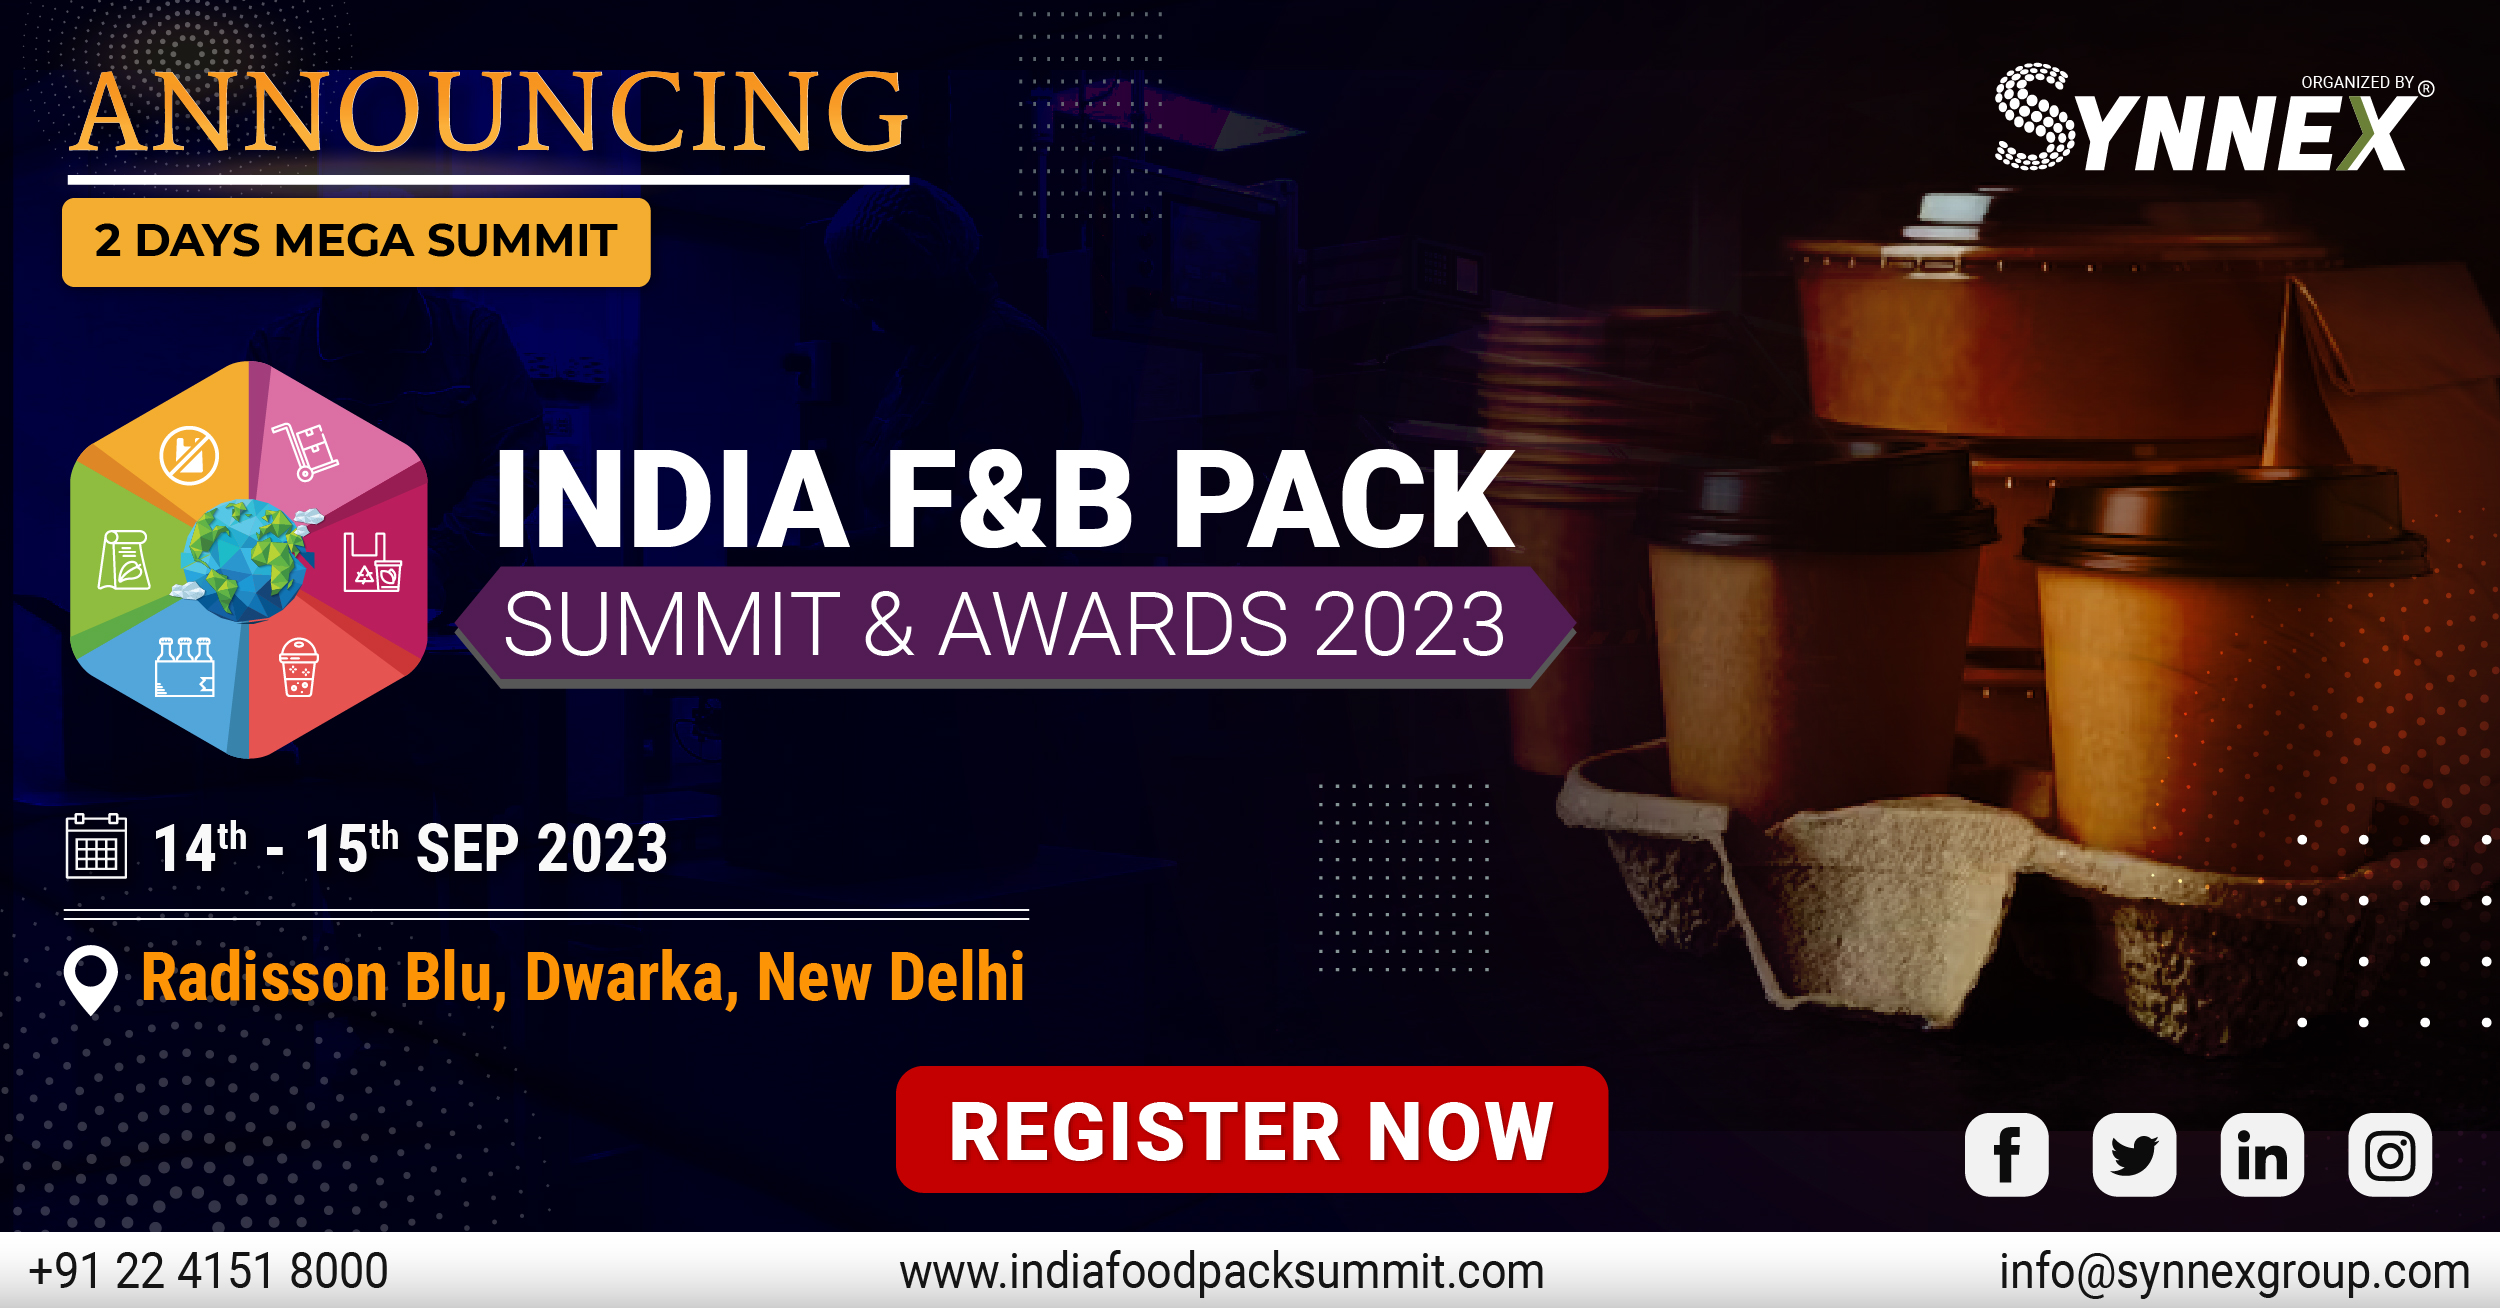 India F&B Pack Summit & Awards 2023, New Delhi, Delhi, India